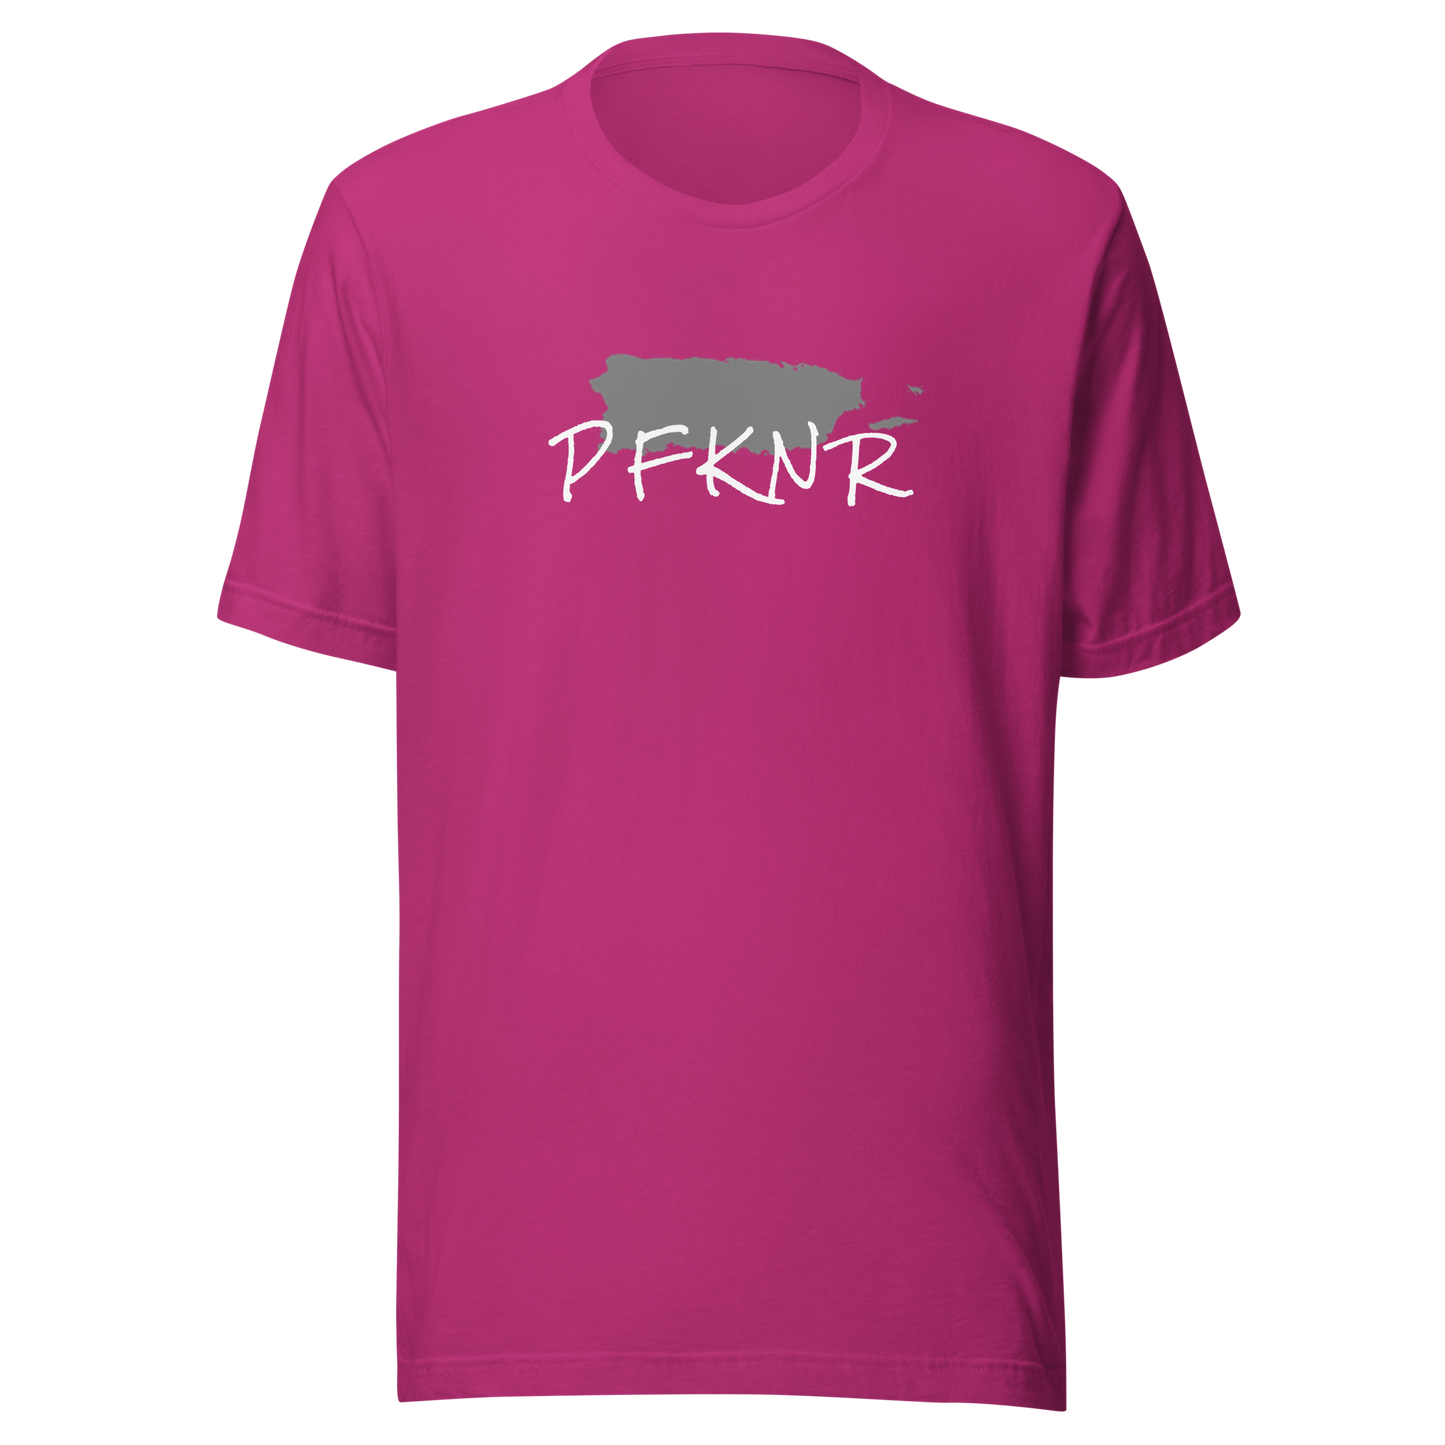 PFKNR t-shirt